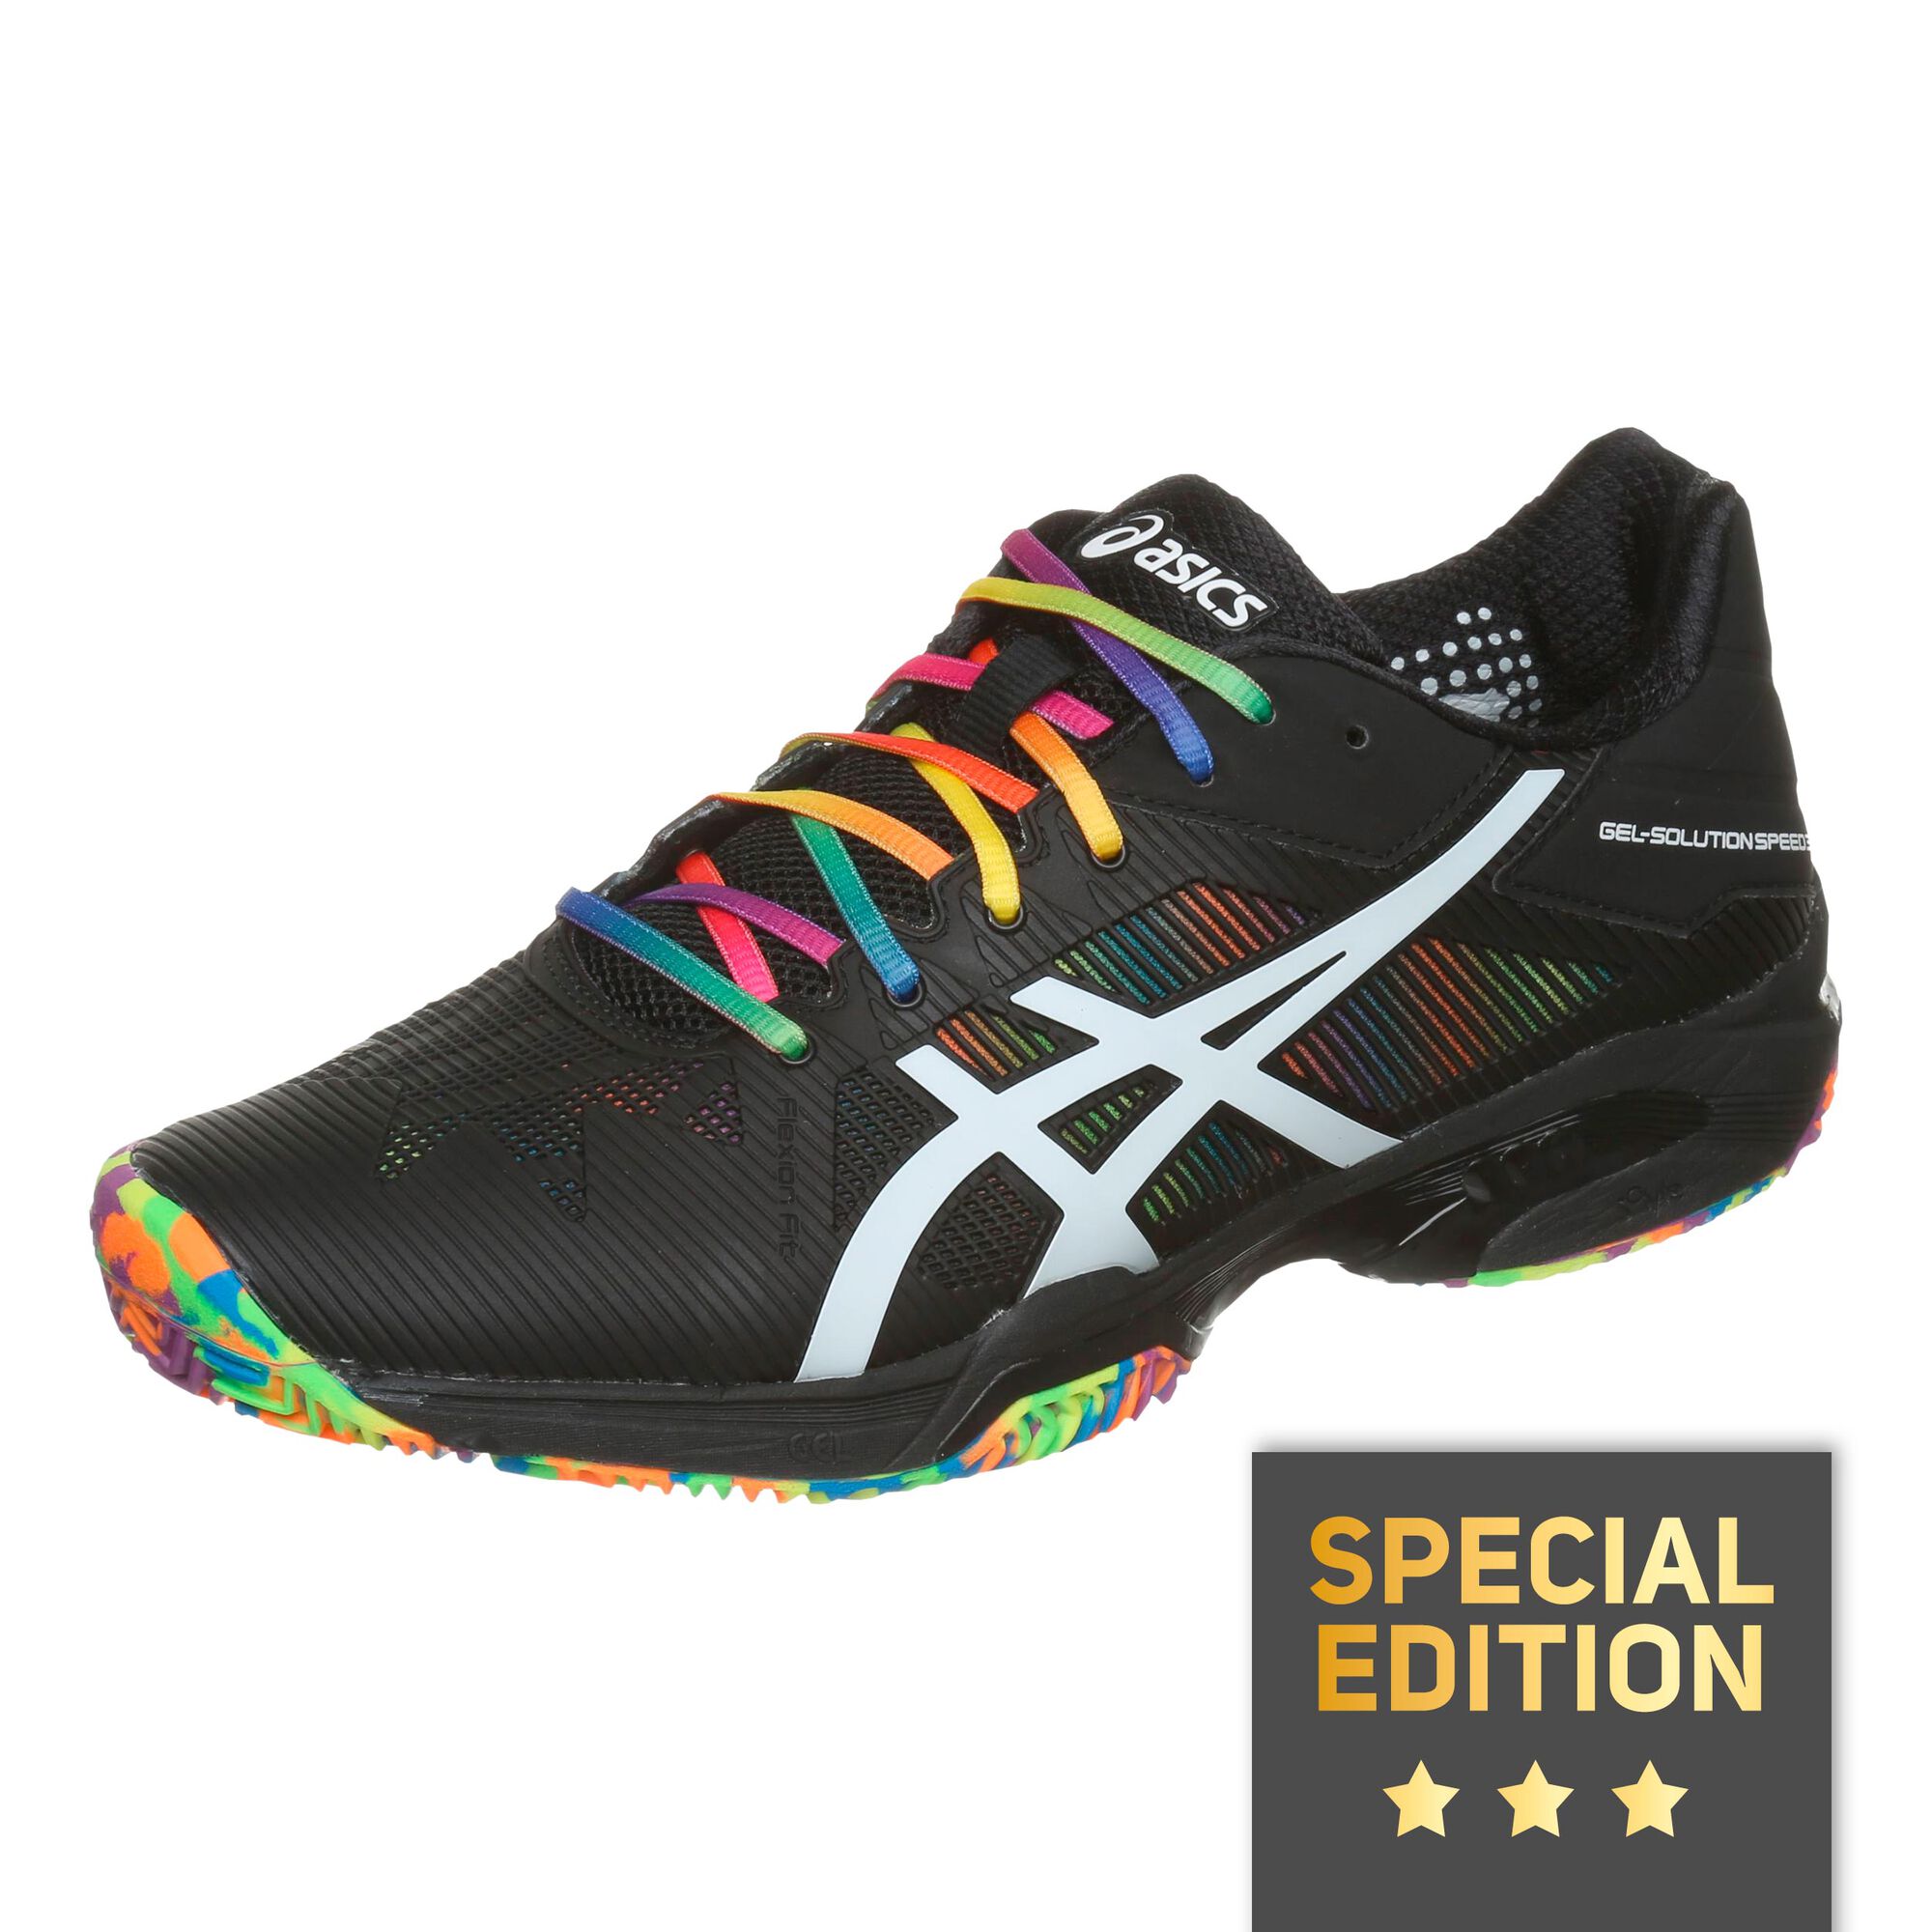 buy ASICS Gel-Solution Speed 3 Court Shoe Special Edition Men - Black, White online | Tennis-Point